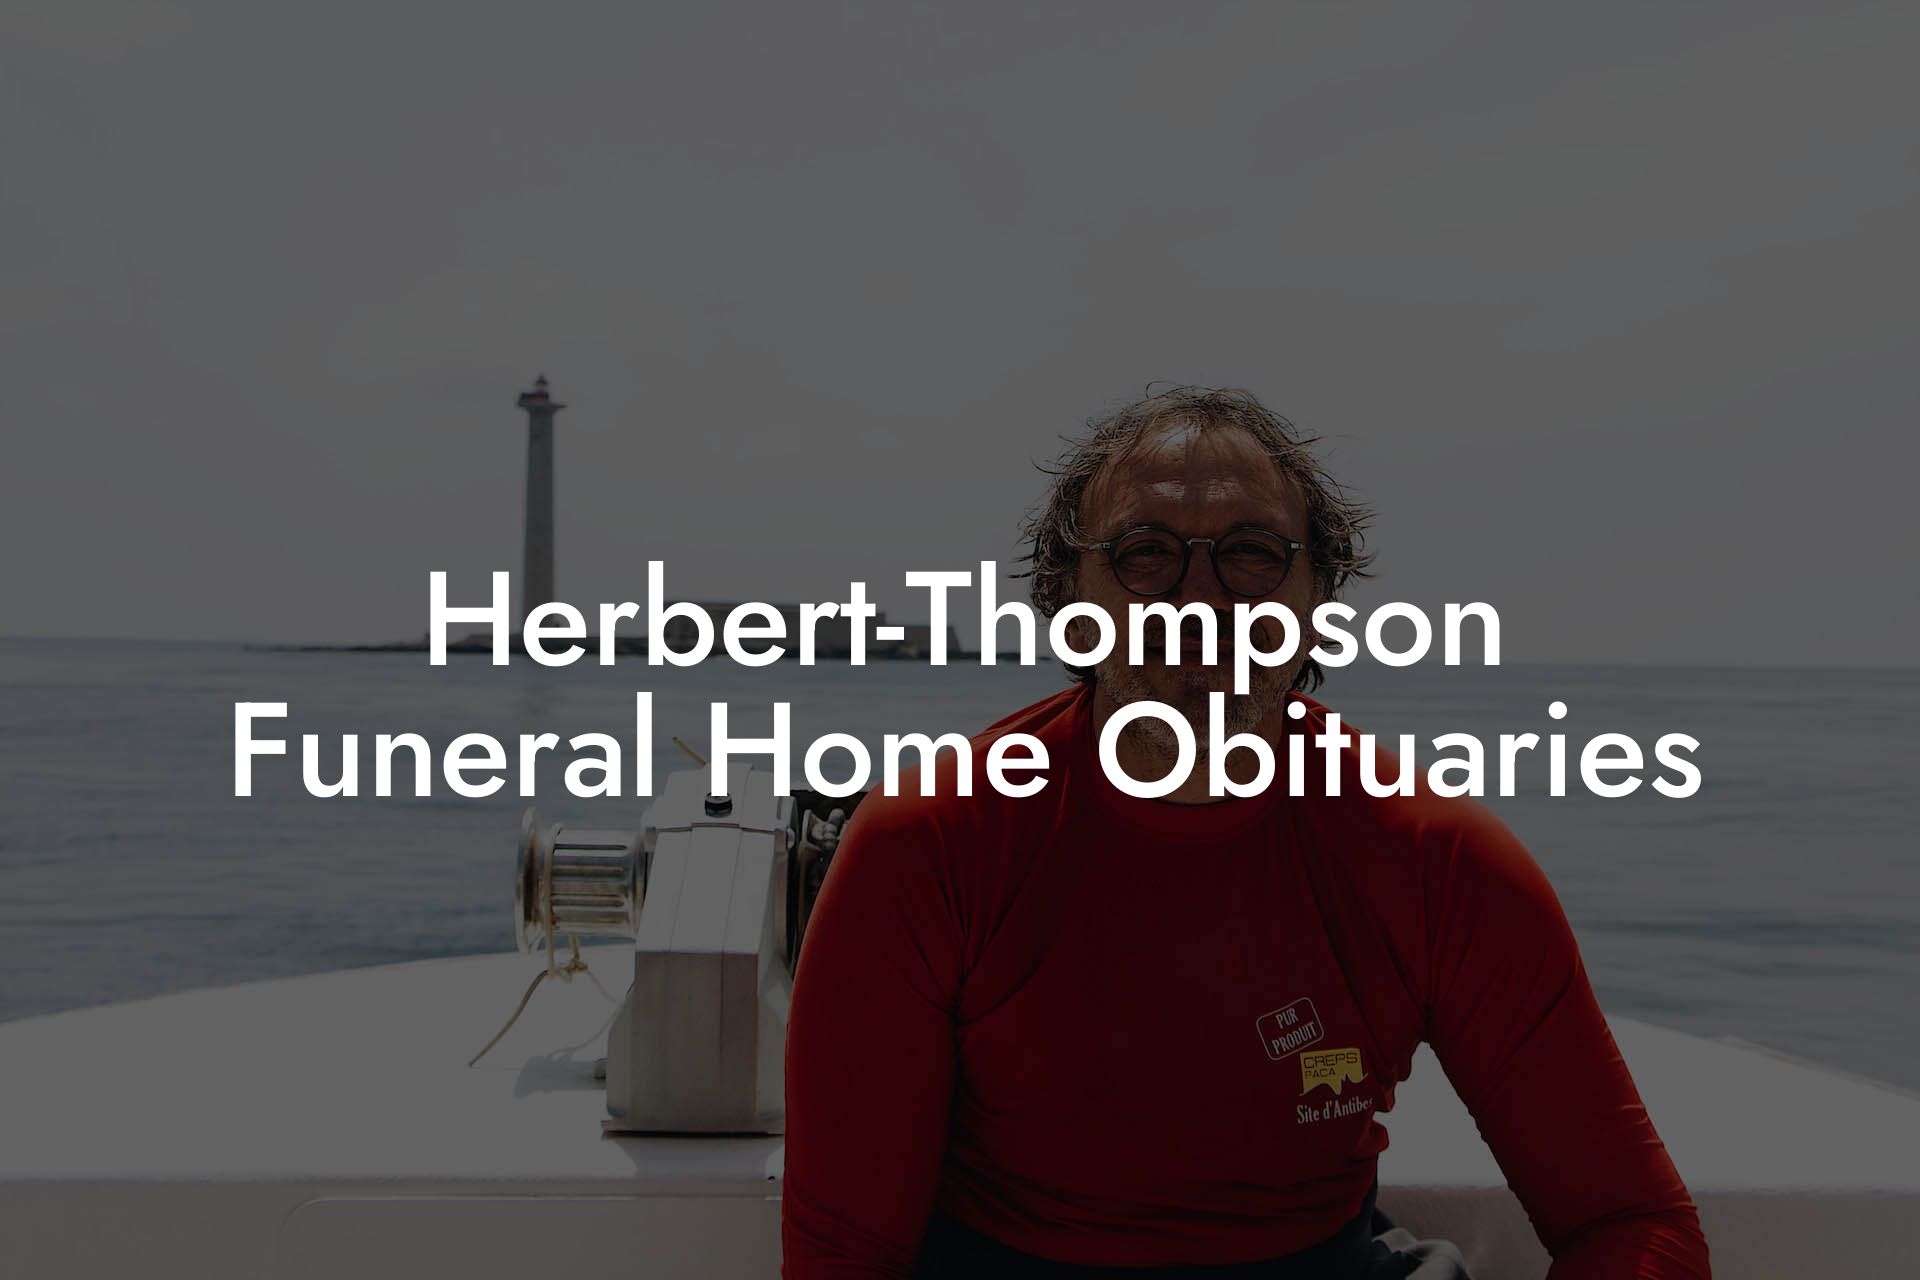 Herbert-Thompson Funeral Home Obituaries